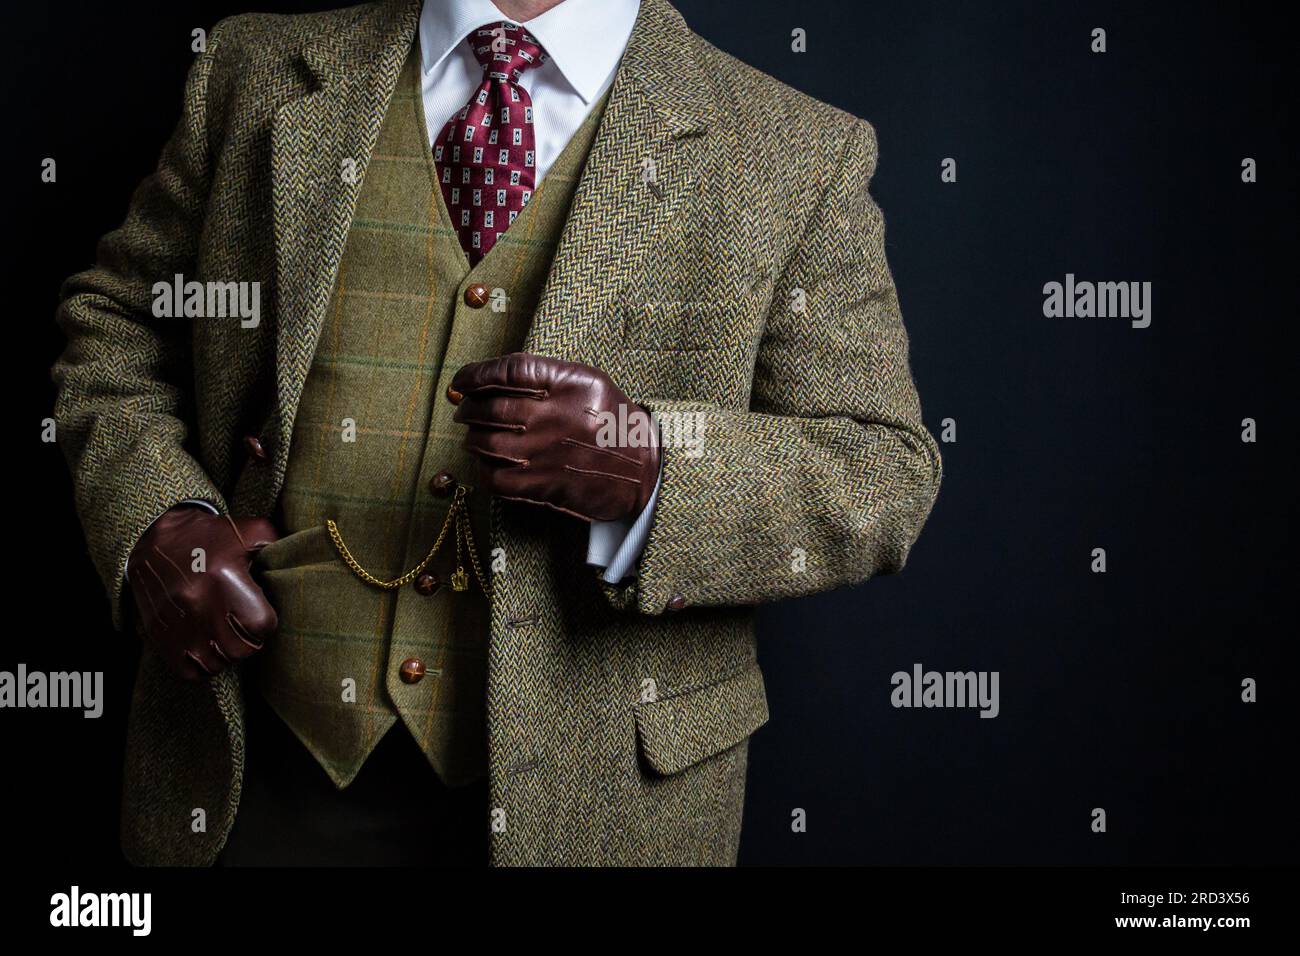 Portrait de Gentleman en costume Tweed et gants en cuir. Style vintage et mode rétro de British Gentleman. Banque D'Images